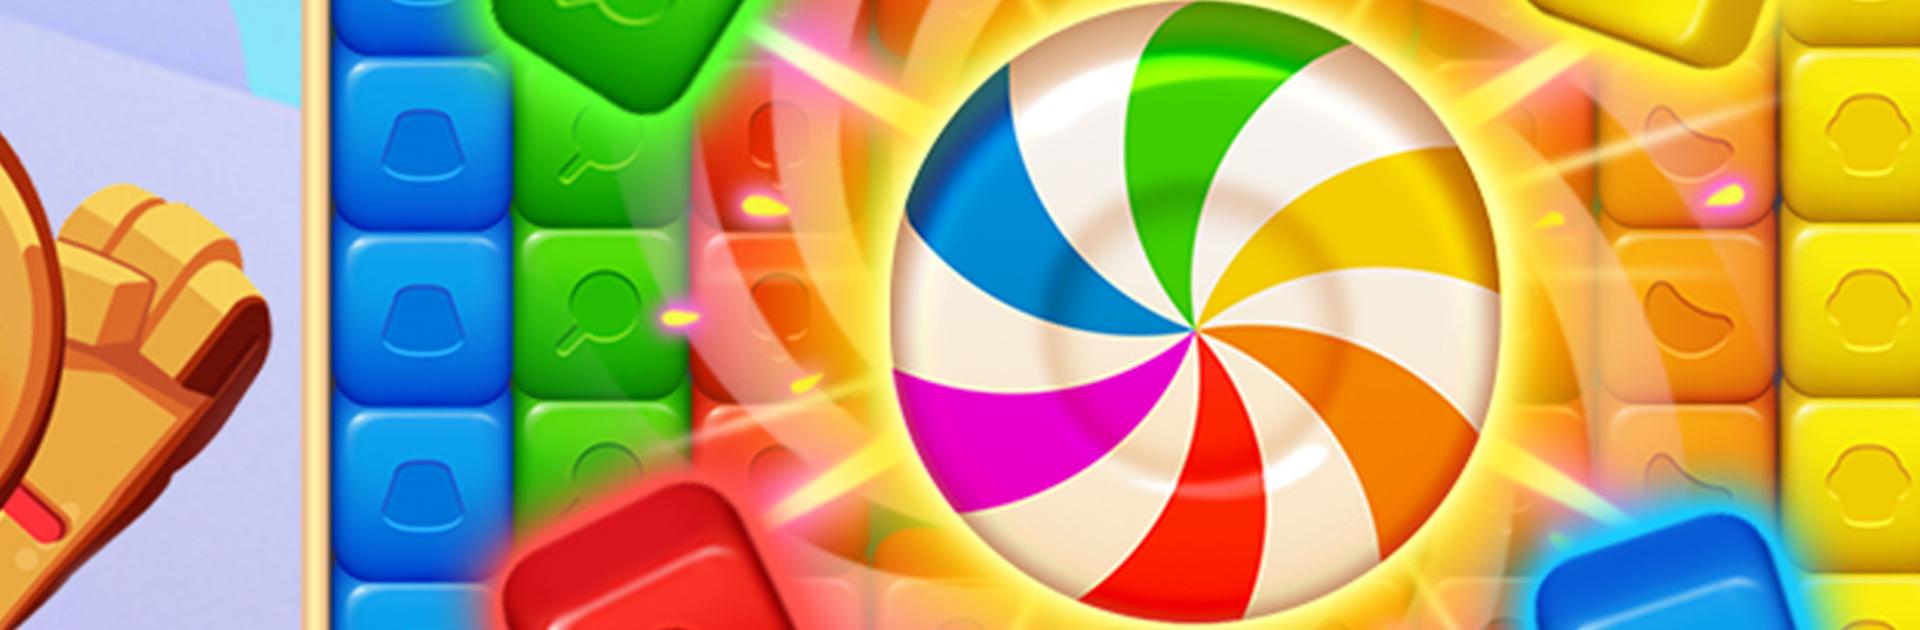 Download & Play Candy Crush Saga on PC & Mac (Emulator)